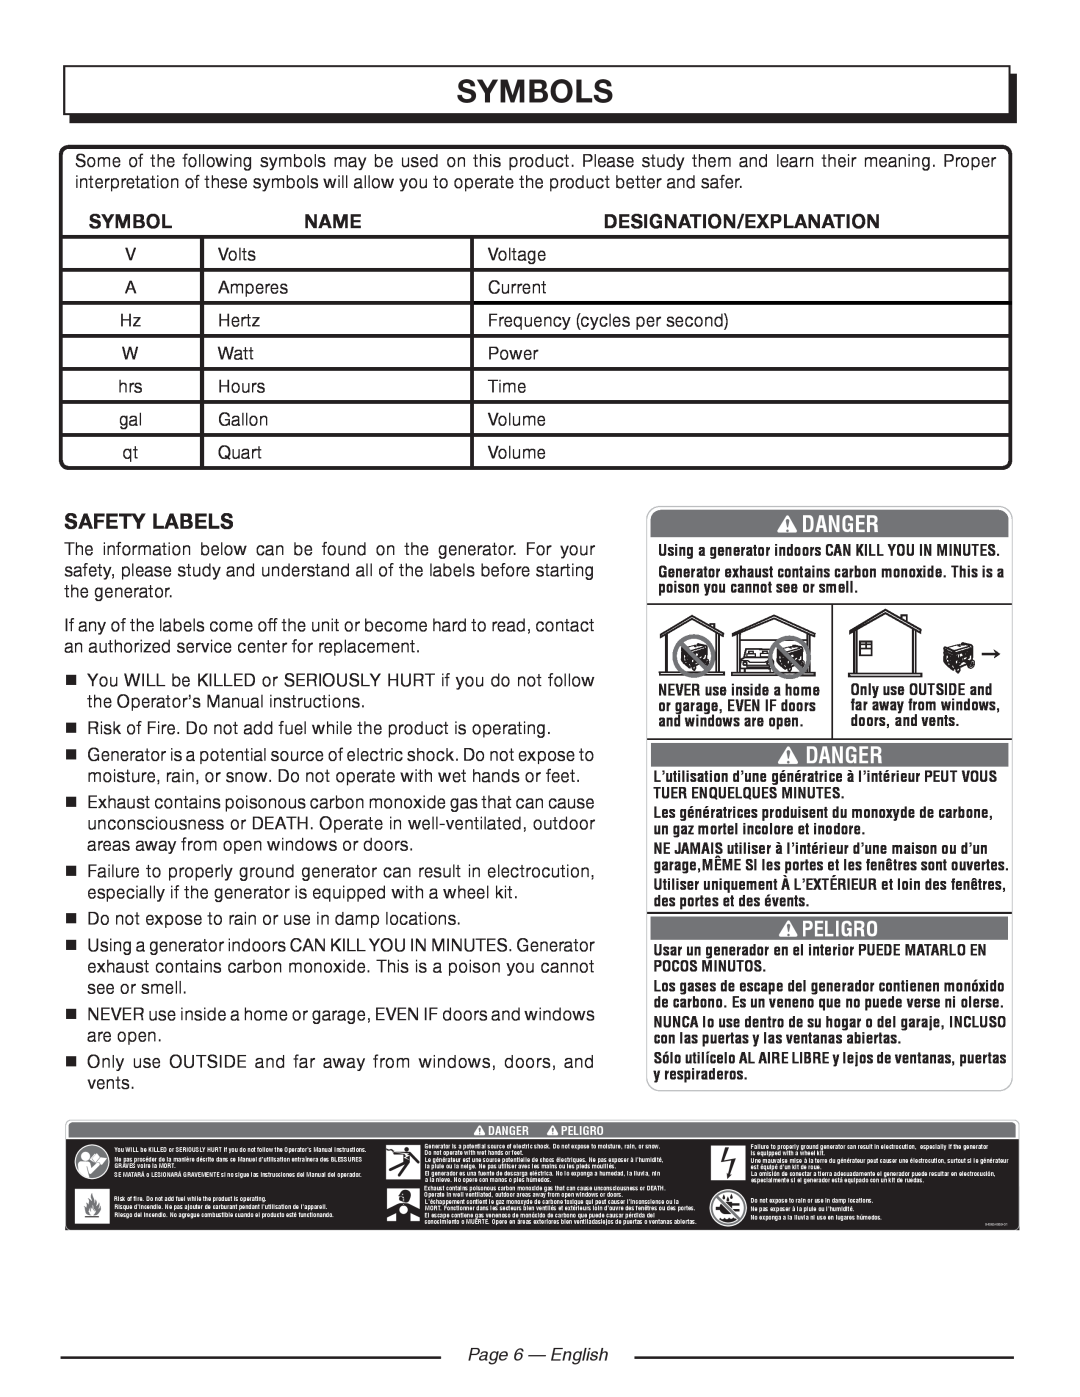 Homelite HGCA1400 Symbols, Danger, Safety Labels, Peligro, Name, Designation/Explanation, Page 6 - English 